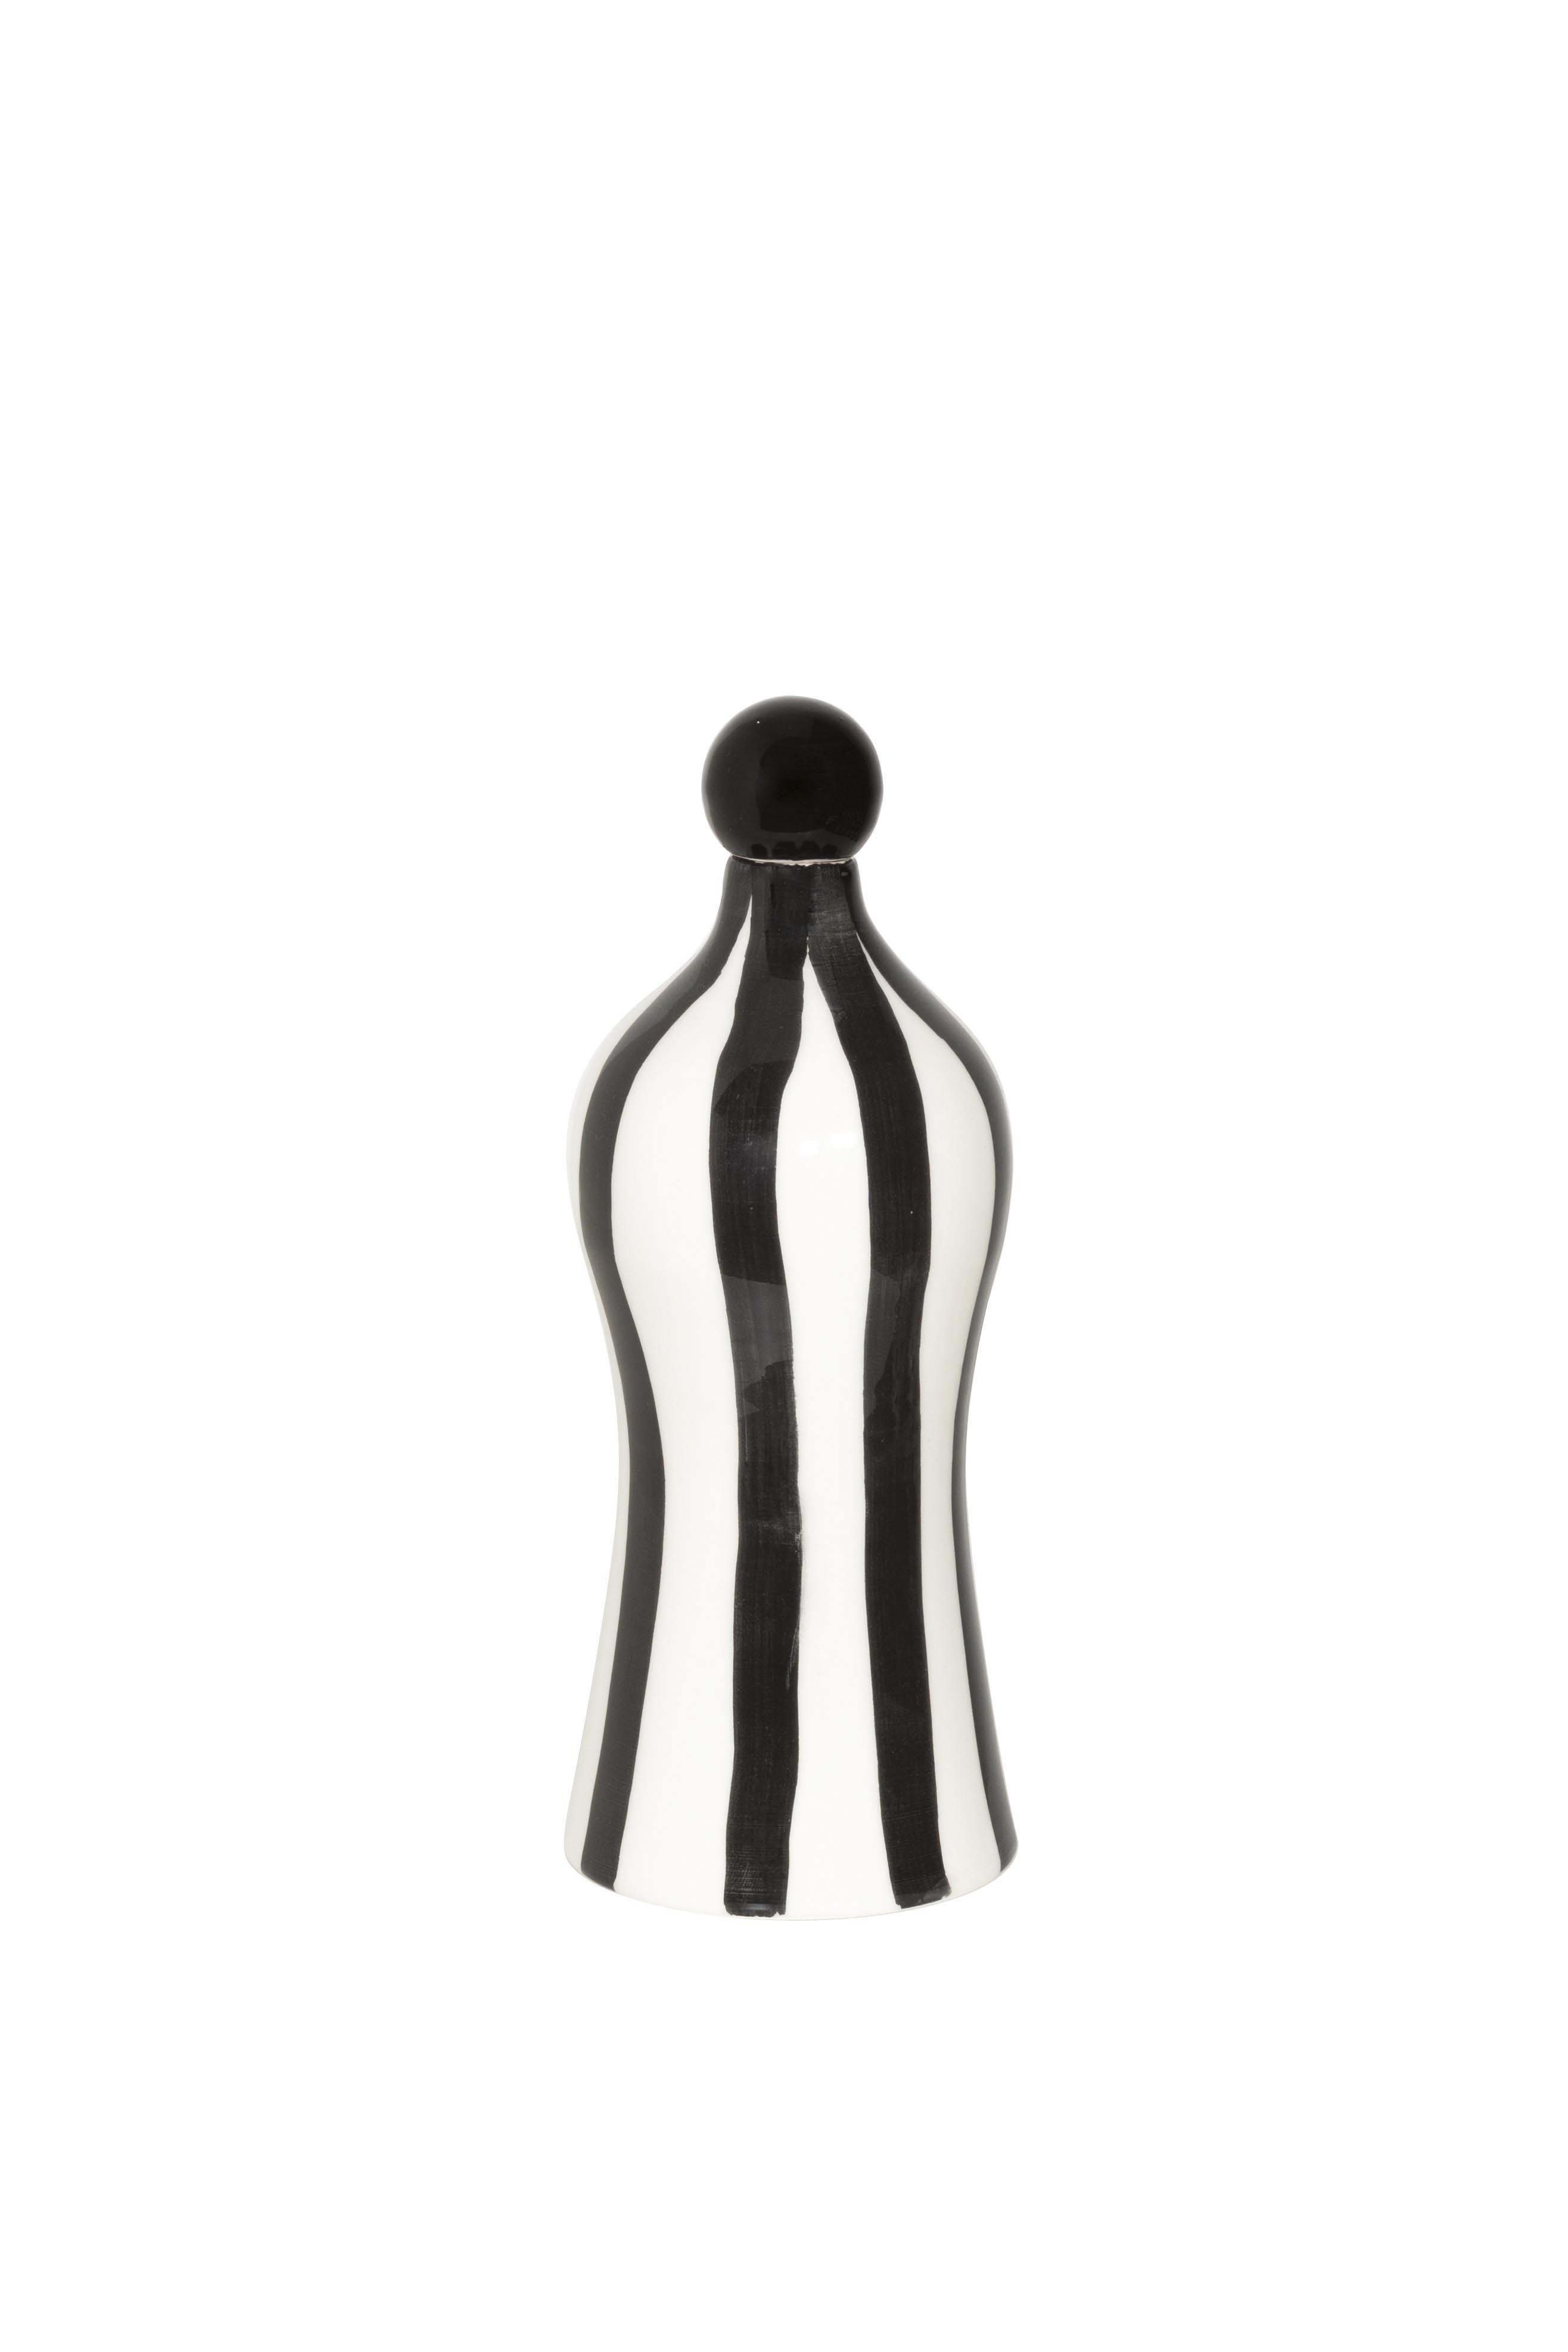 Zafferano Poldina Stopper Nero / Black + Lido Keramik Flasche mit vertikalen Streifen in schwarz